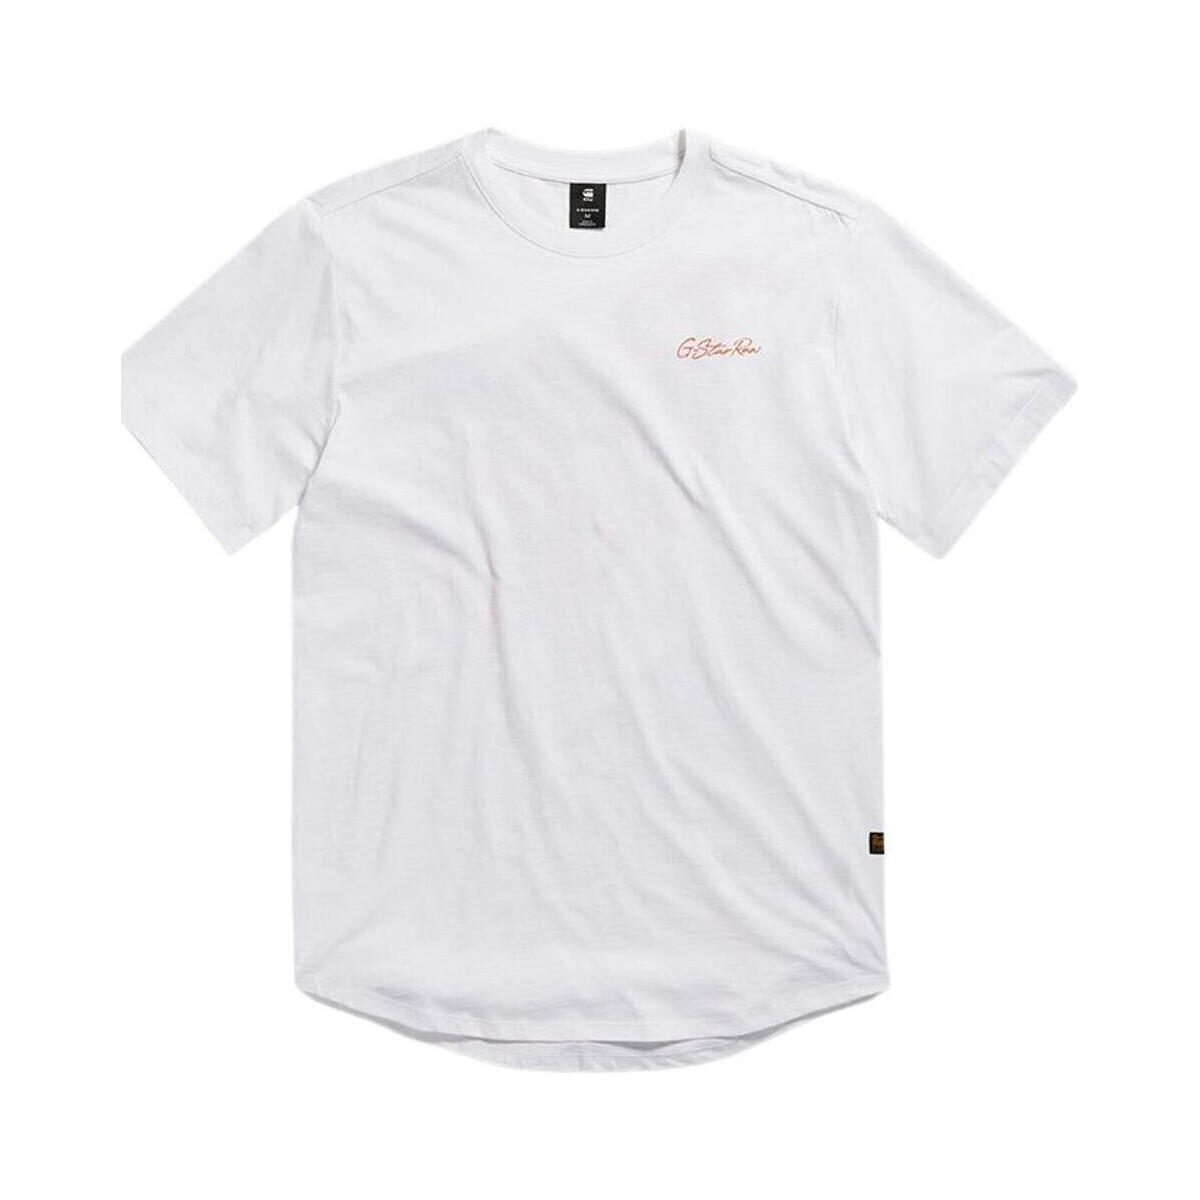 Vêtements Homme T-shirts manches courtes G-Star Raw  Blanc